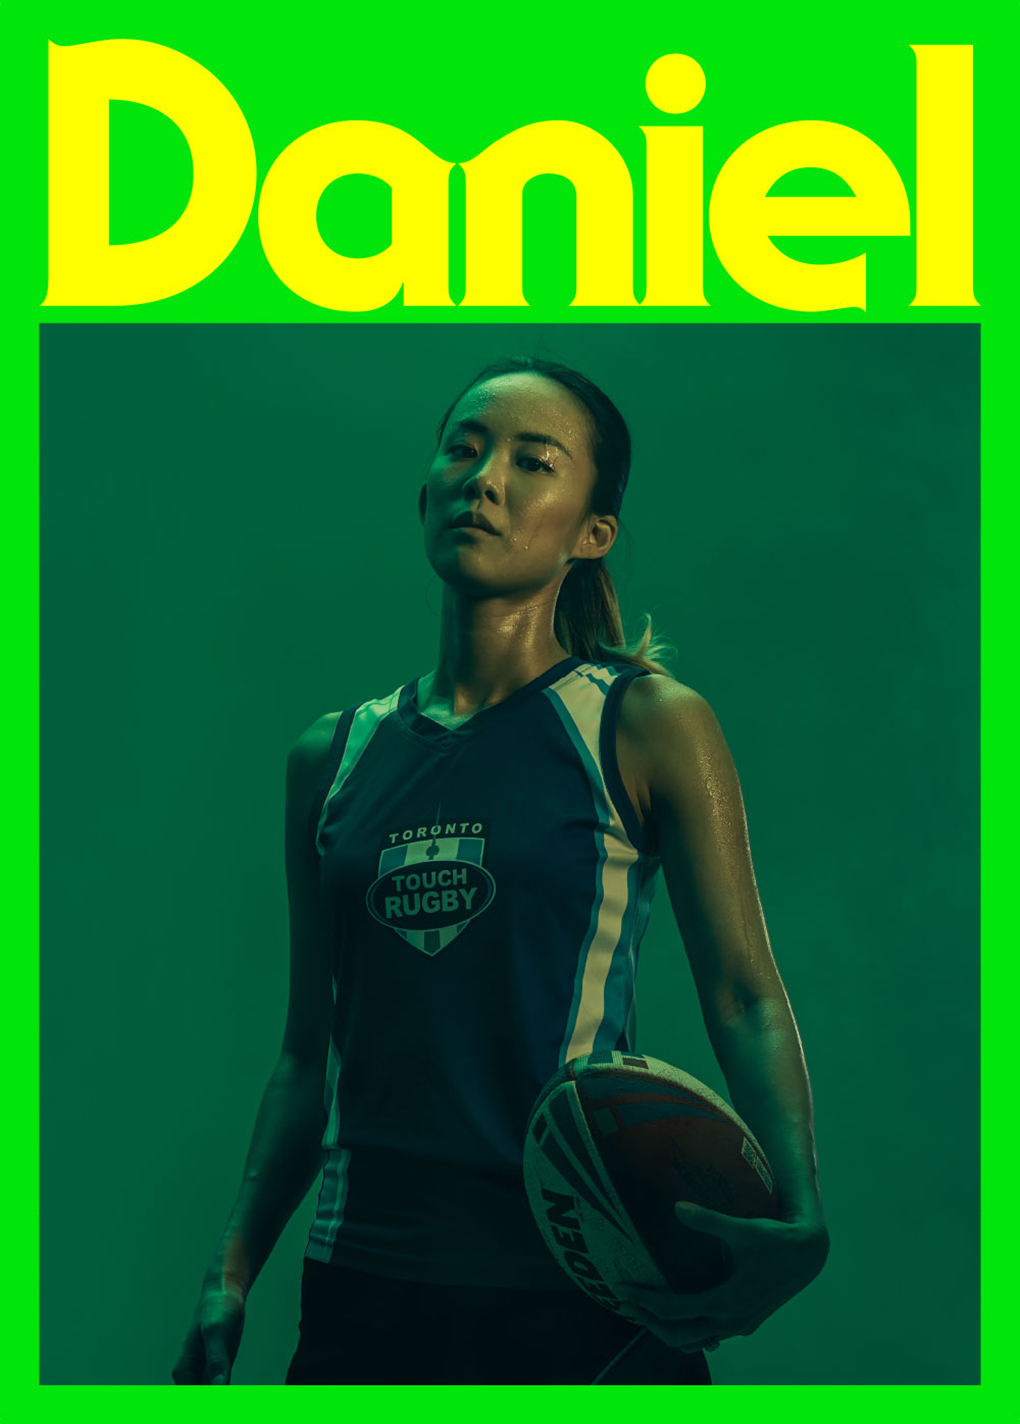 Daniel Rugby Portrait poster